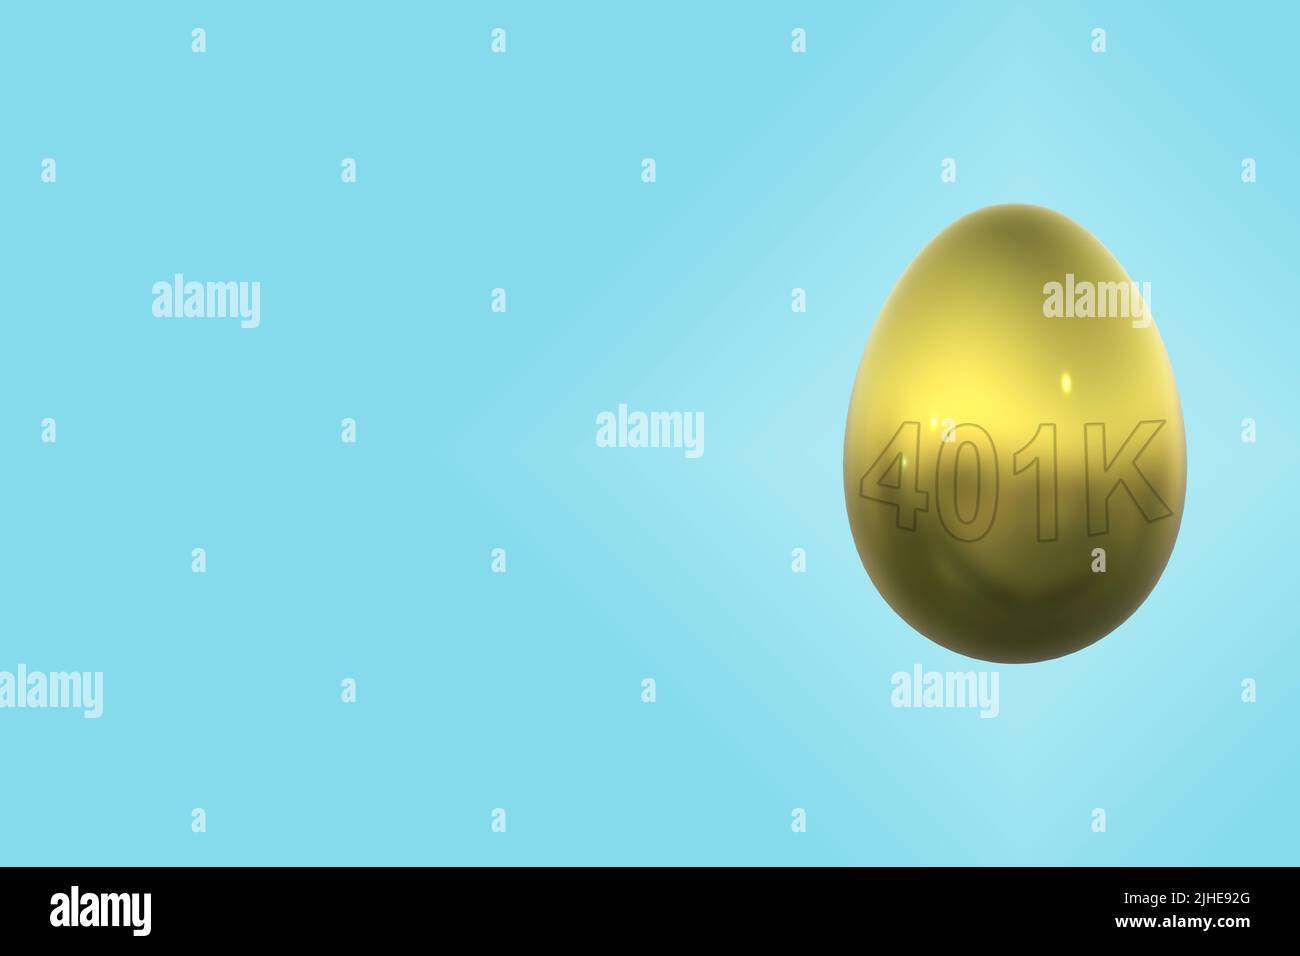 Large gold golden egg eggs savings investments pension pot nest egg concept stamped embossed 401K Stock Photo